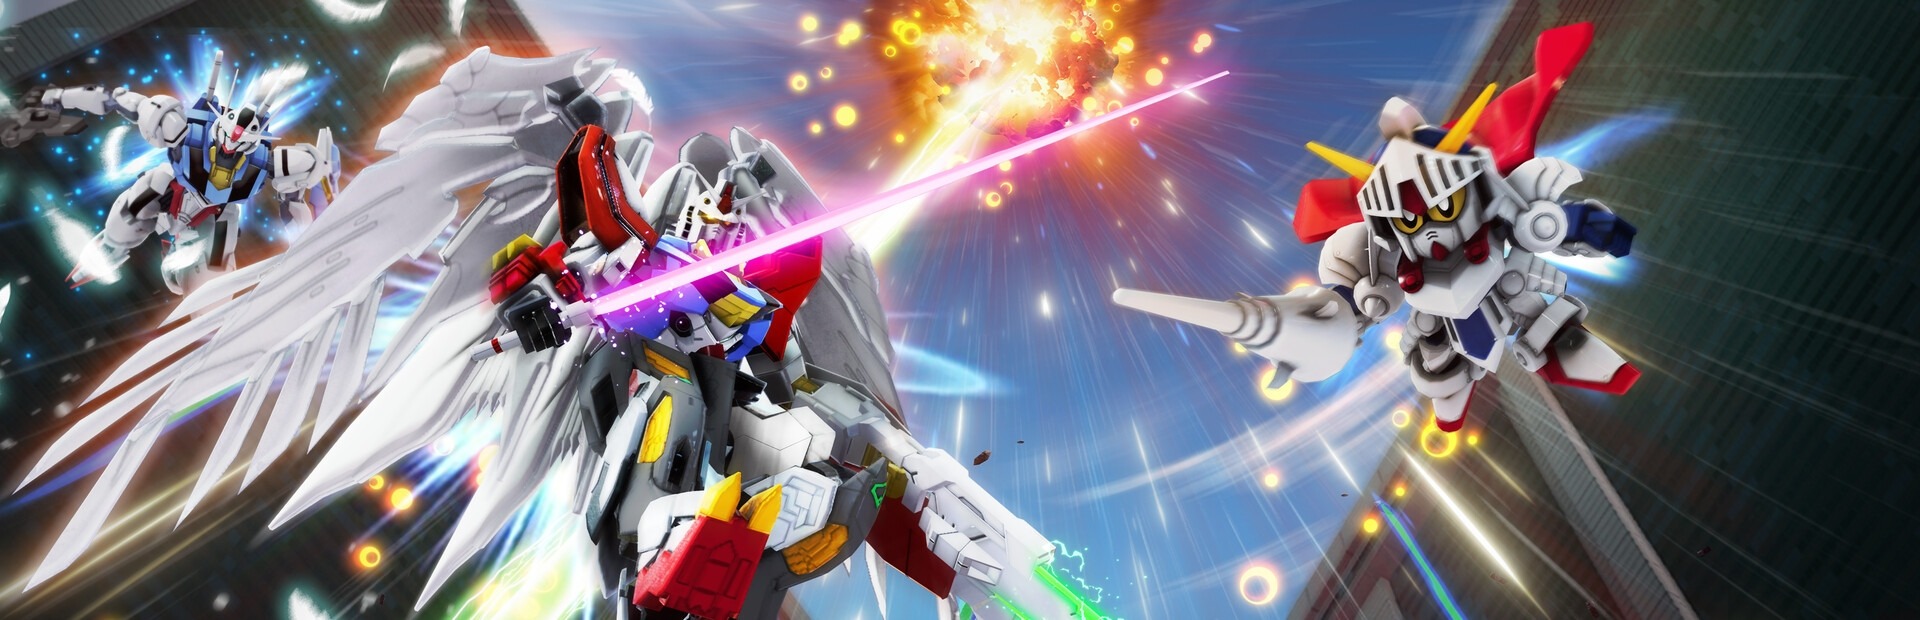 Gundam Breaker 4 Switch